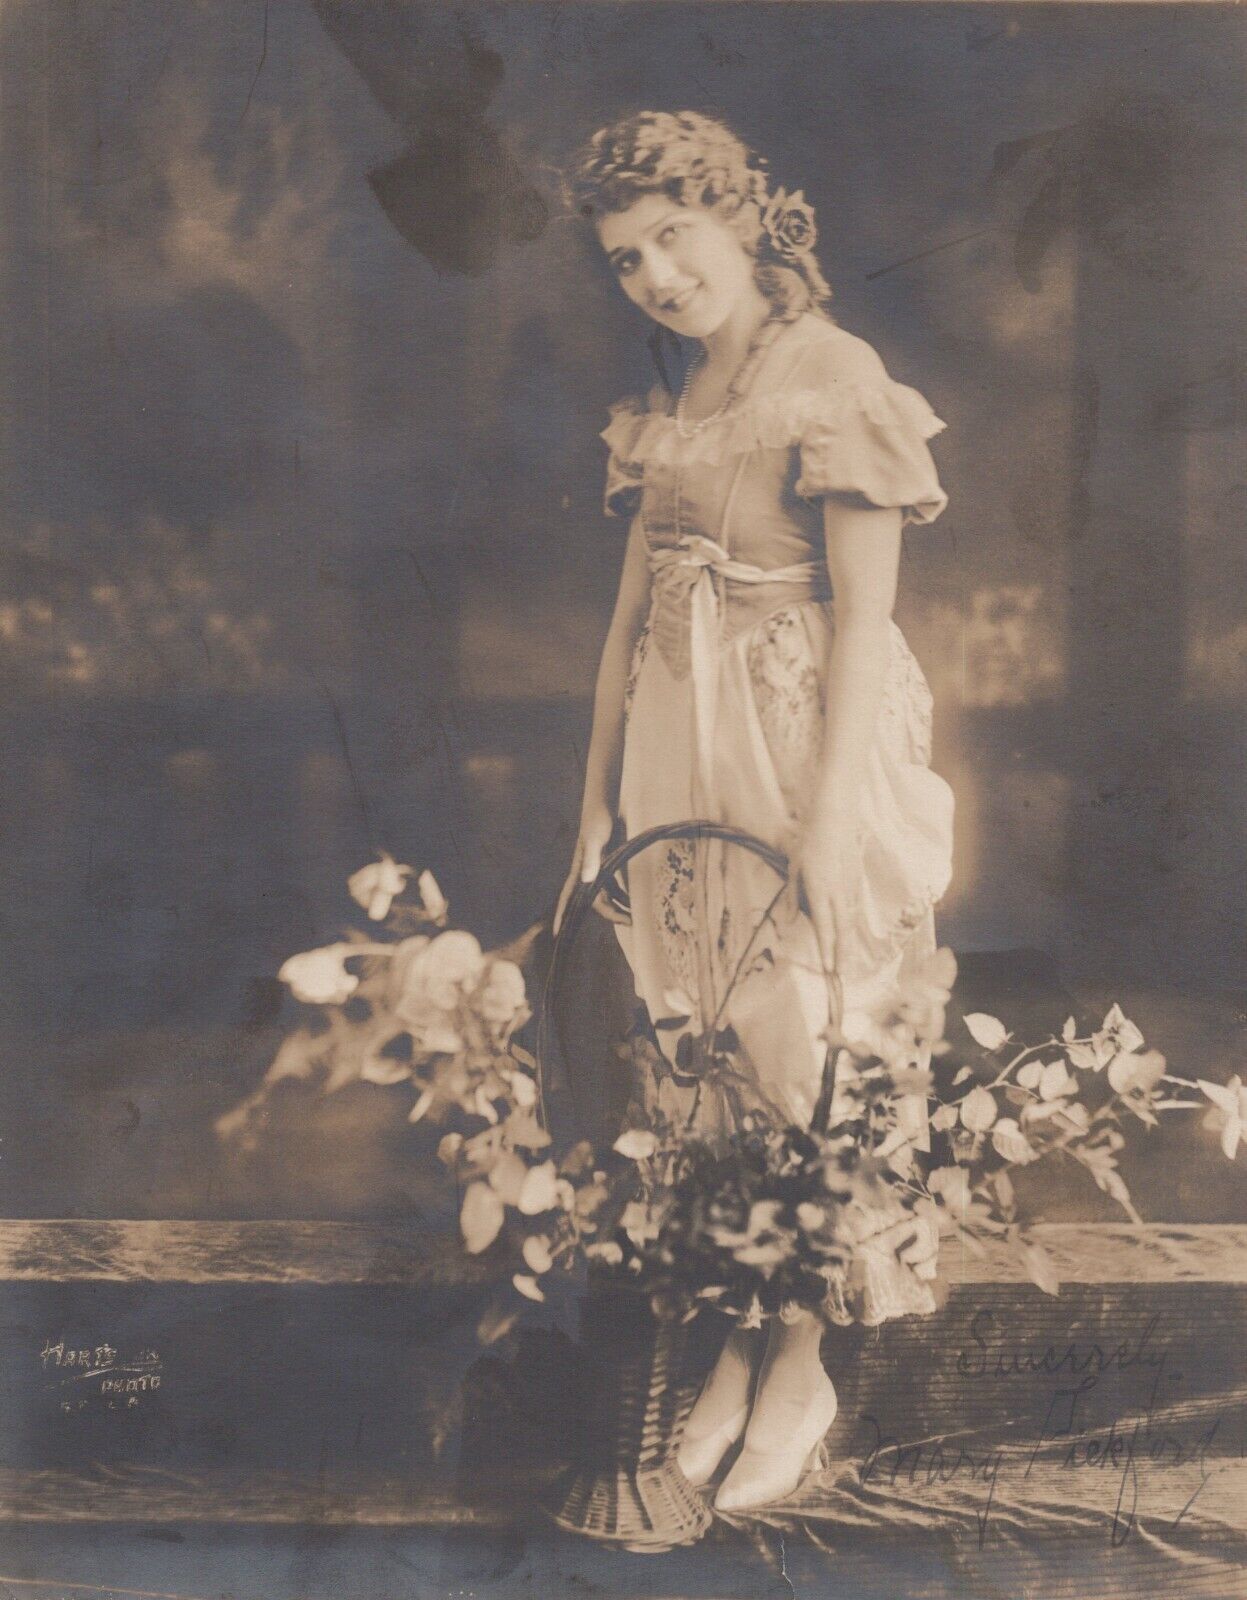 Mary Pickford (1920s) ❤🎬 Stylish Glamorous Pose Vintage Photo by Hartsook K 206